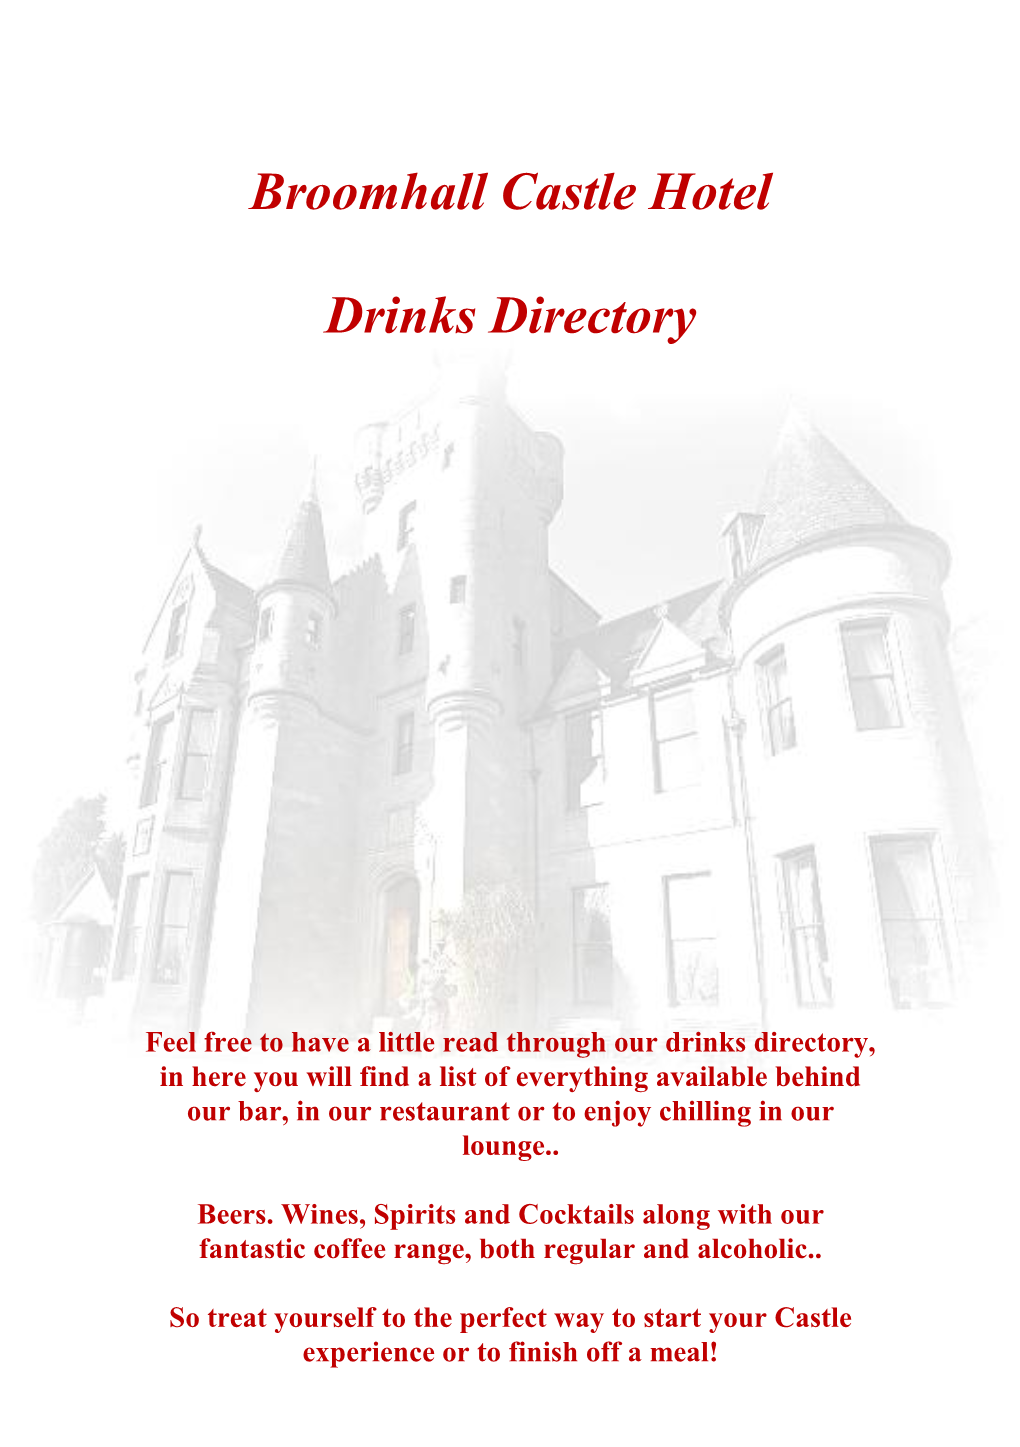 Broomhall Castle Hotel Drinks Directory